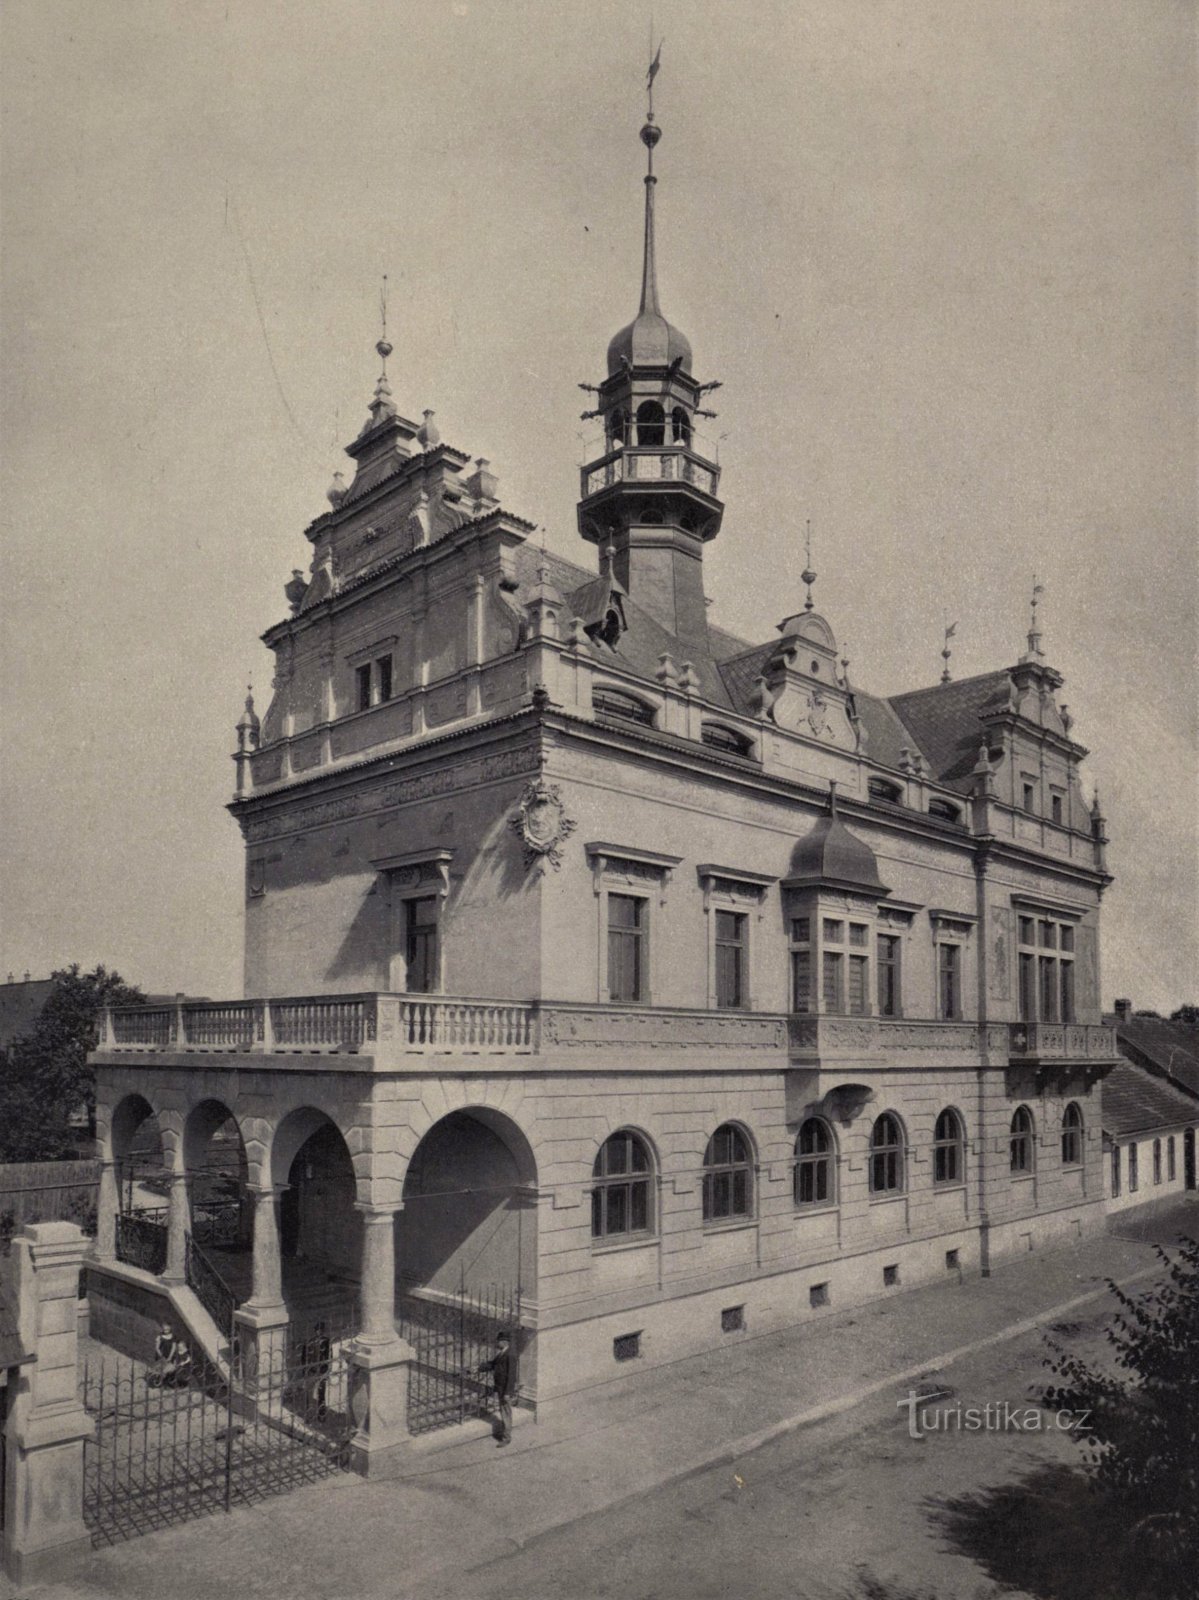 District house in Nové Bydžov in 1902